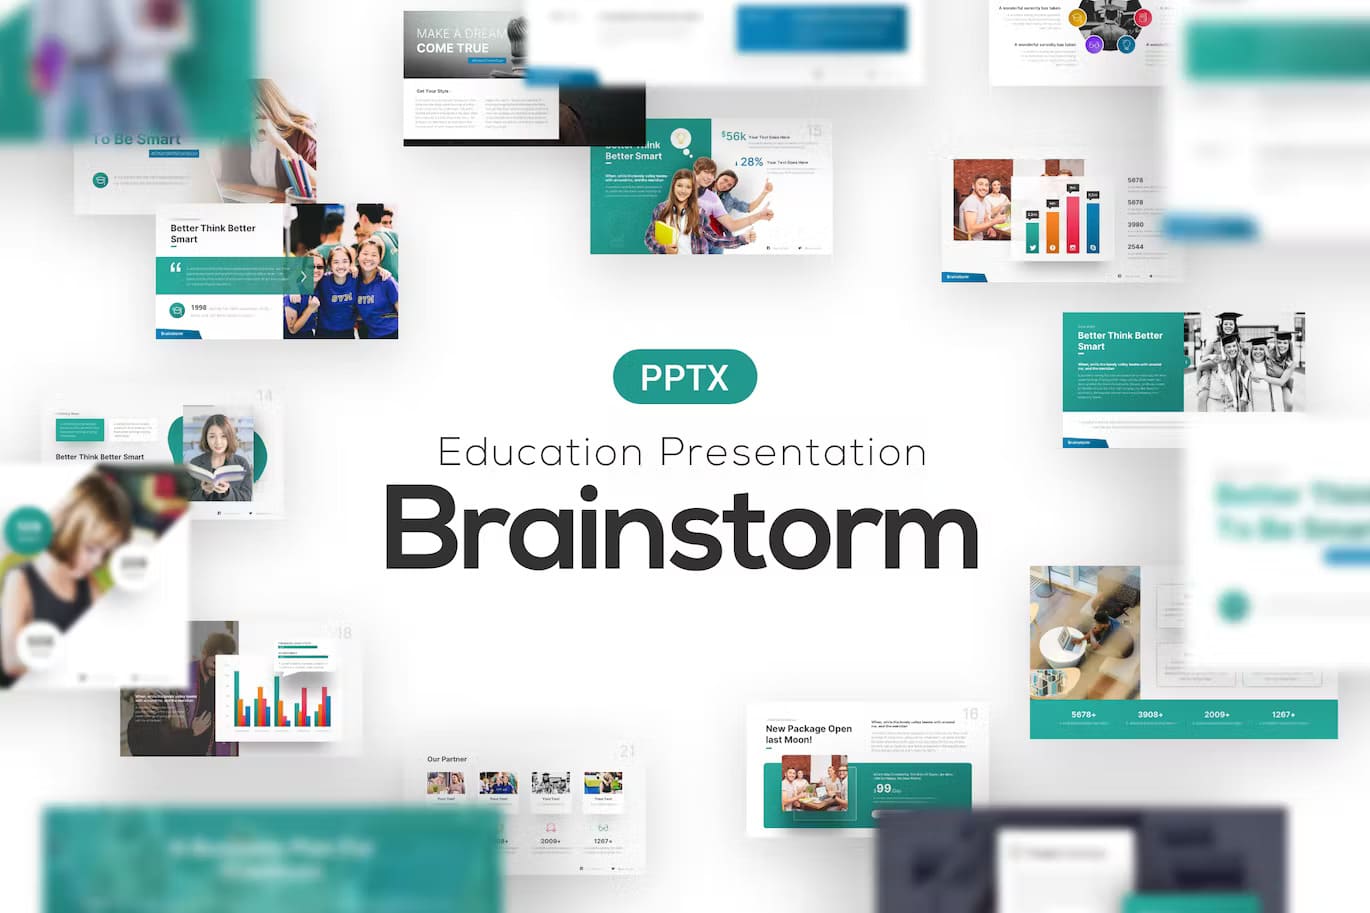 Brainstorm university education template.